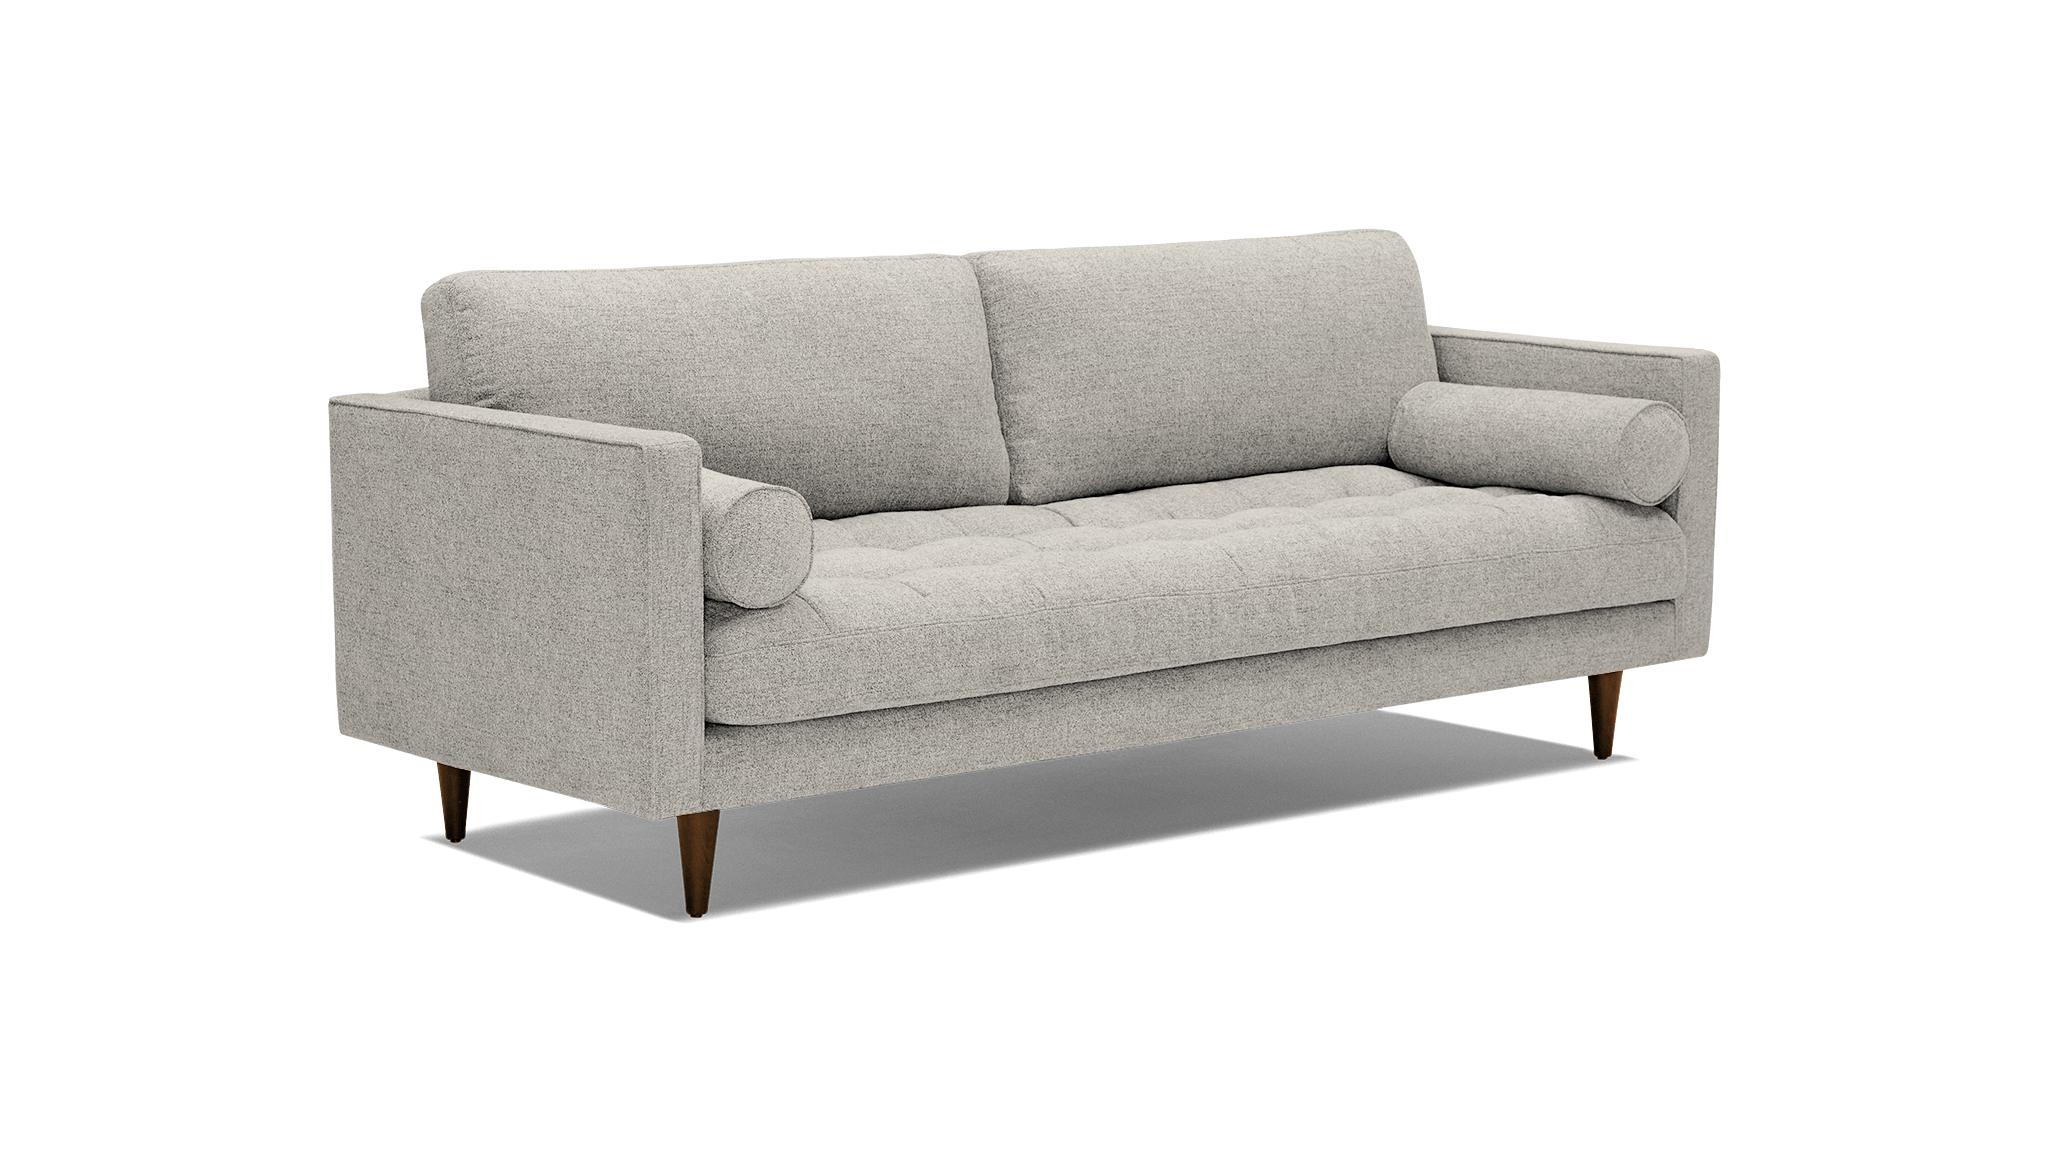 White Briar Mid Century Modern Sofa - Bloke Cotton - Mocha - Image 1